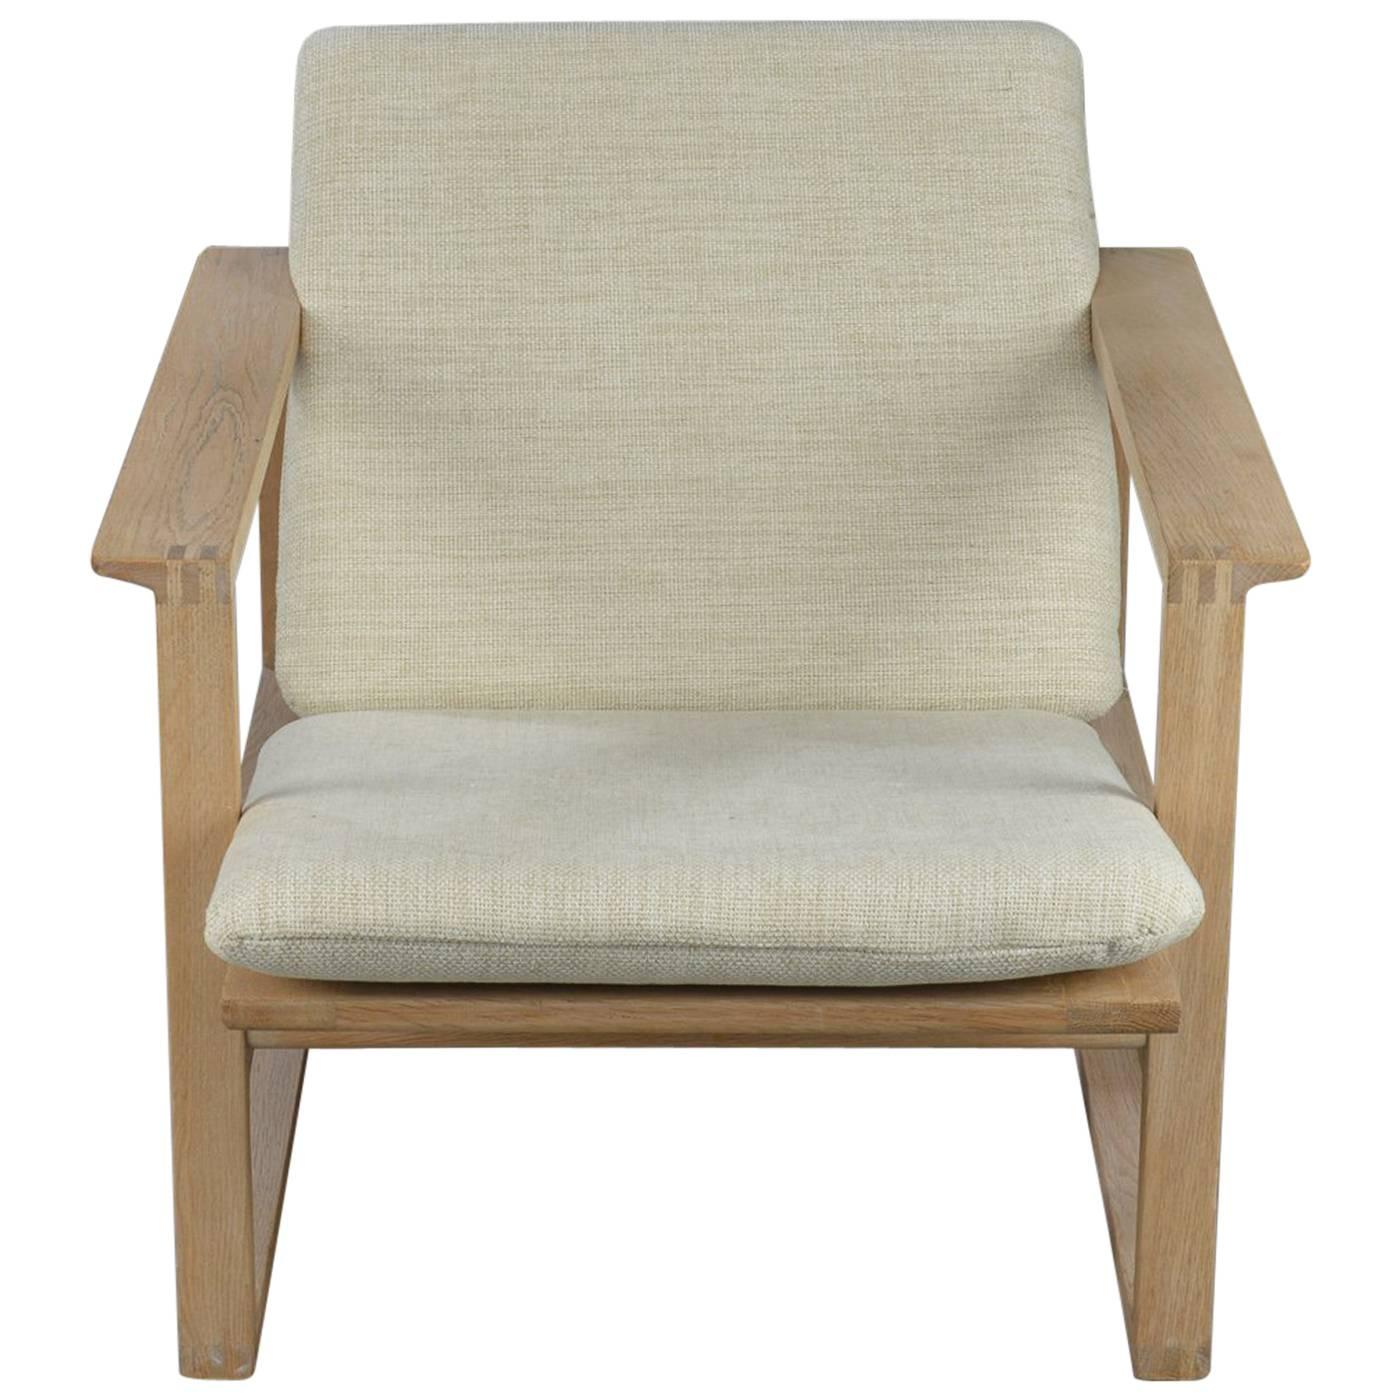 Børge Mogensen Oak Lounge Sled Chair 2256 for Fredericia Furniture Designed 1956